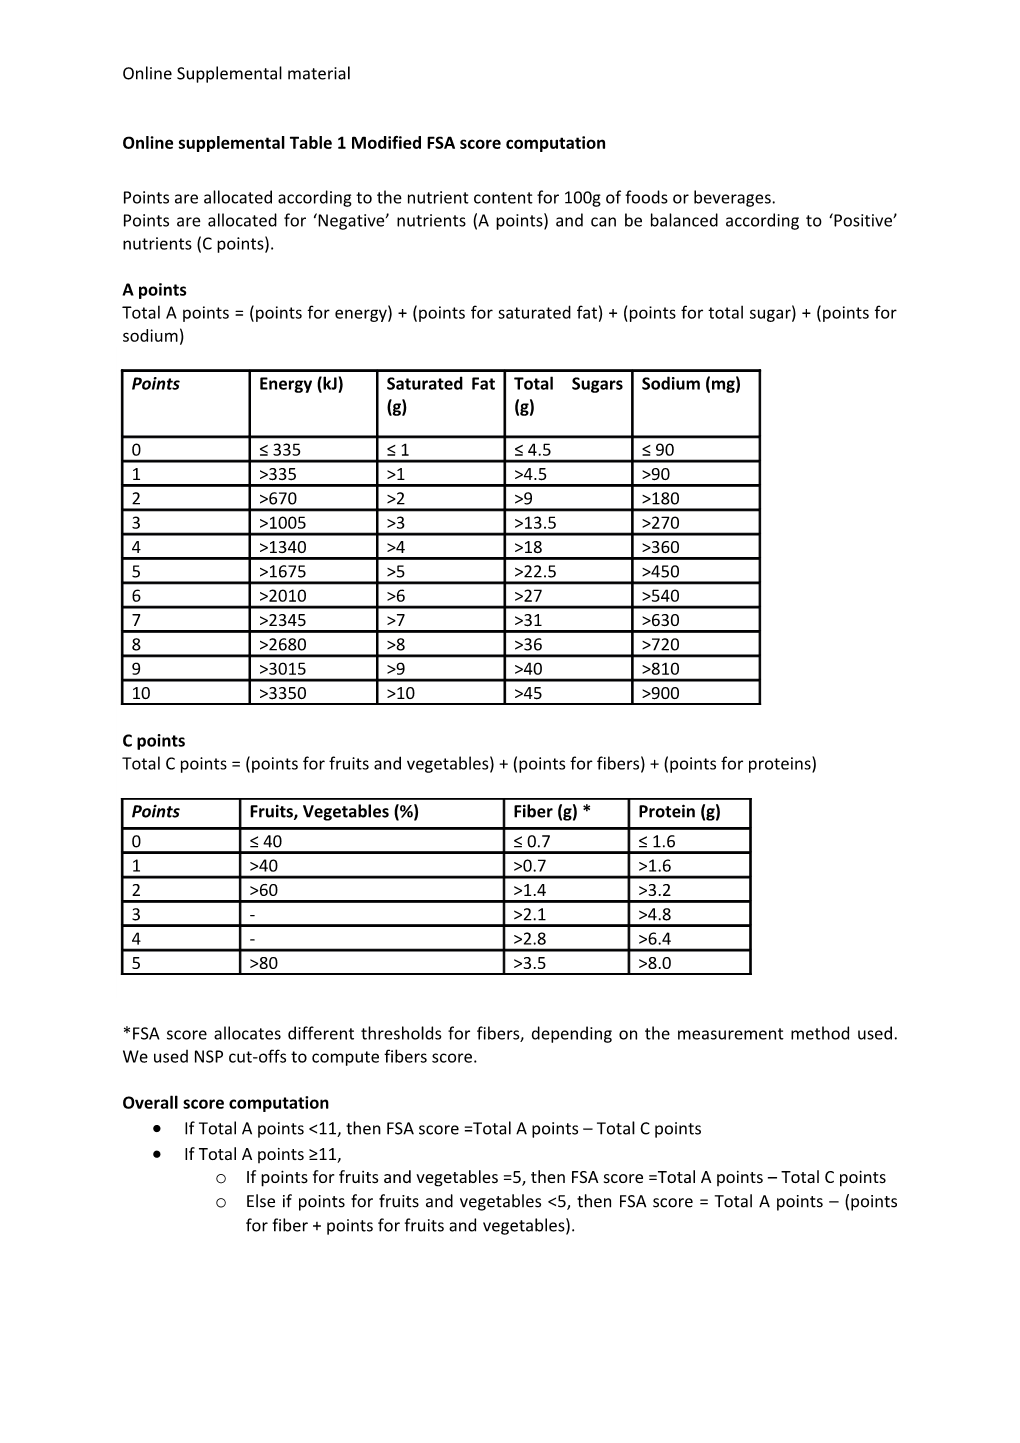 Online Supplemental Table 1 Modified FSA Score Computation